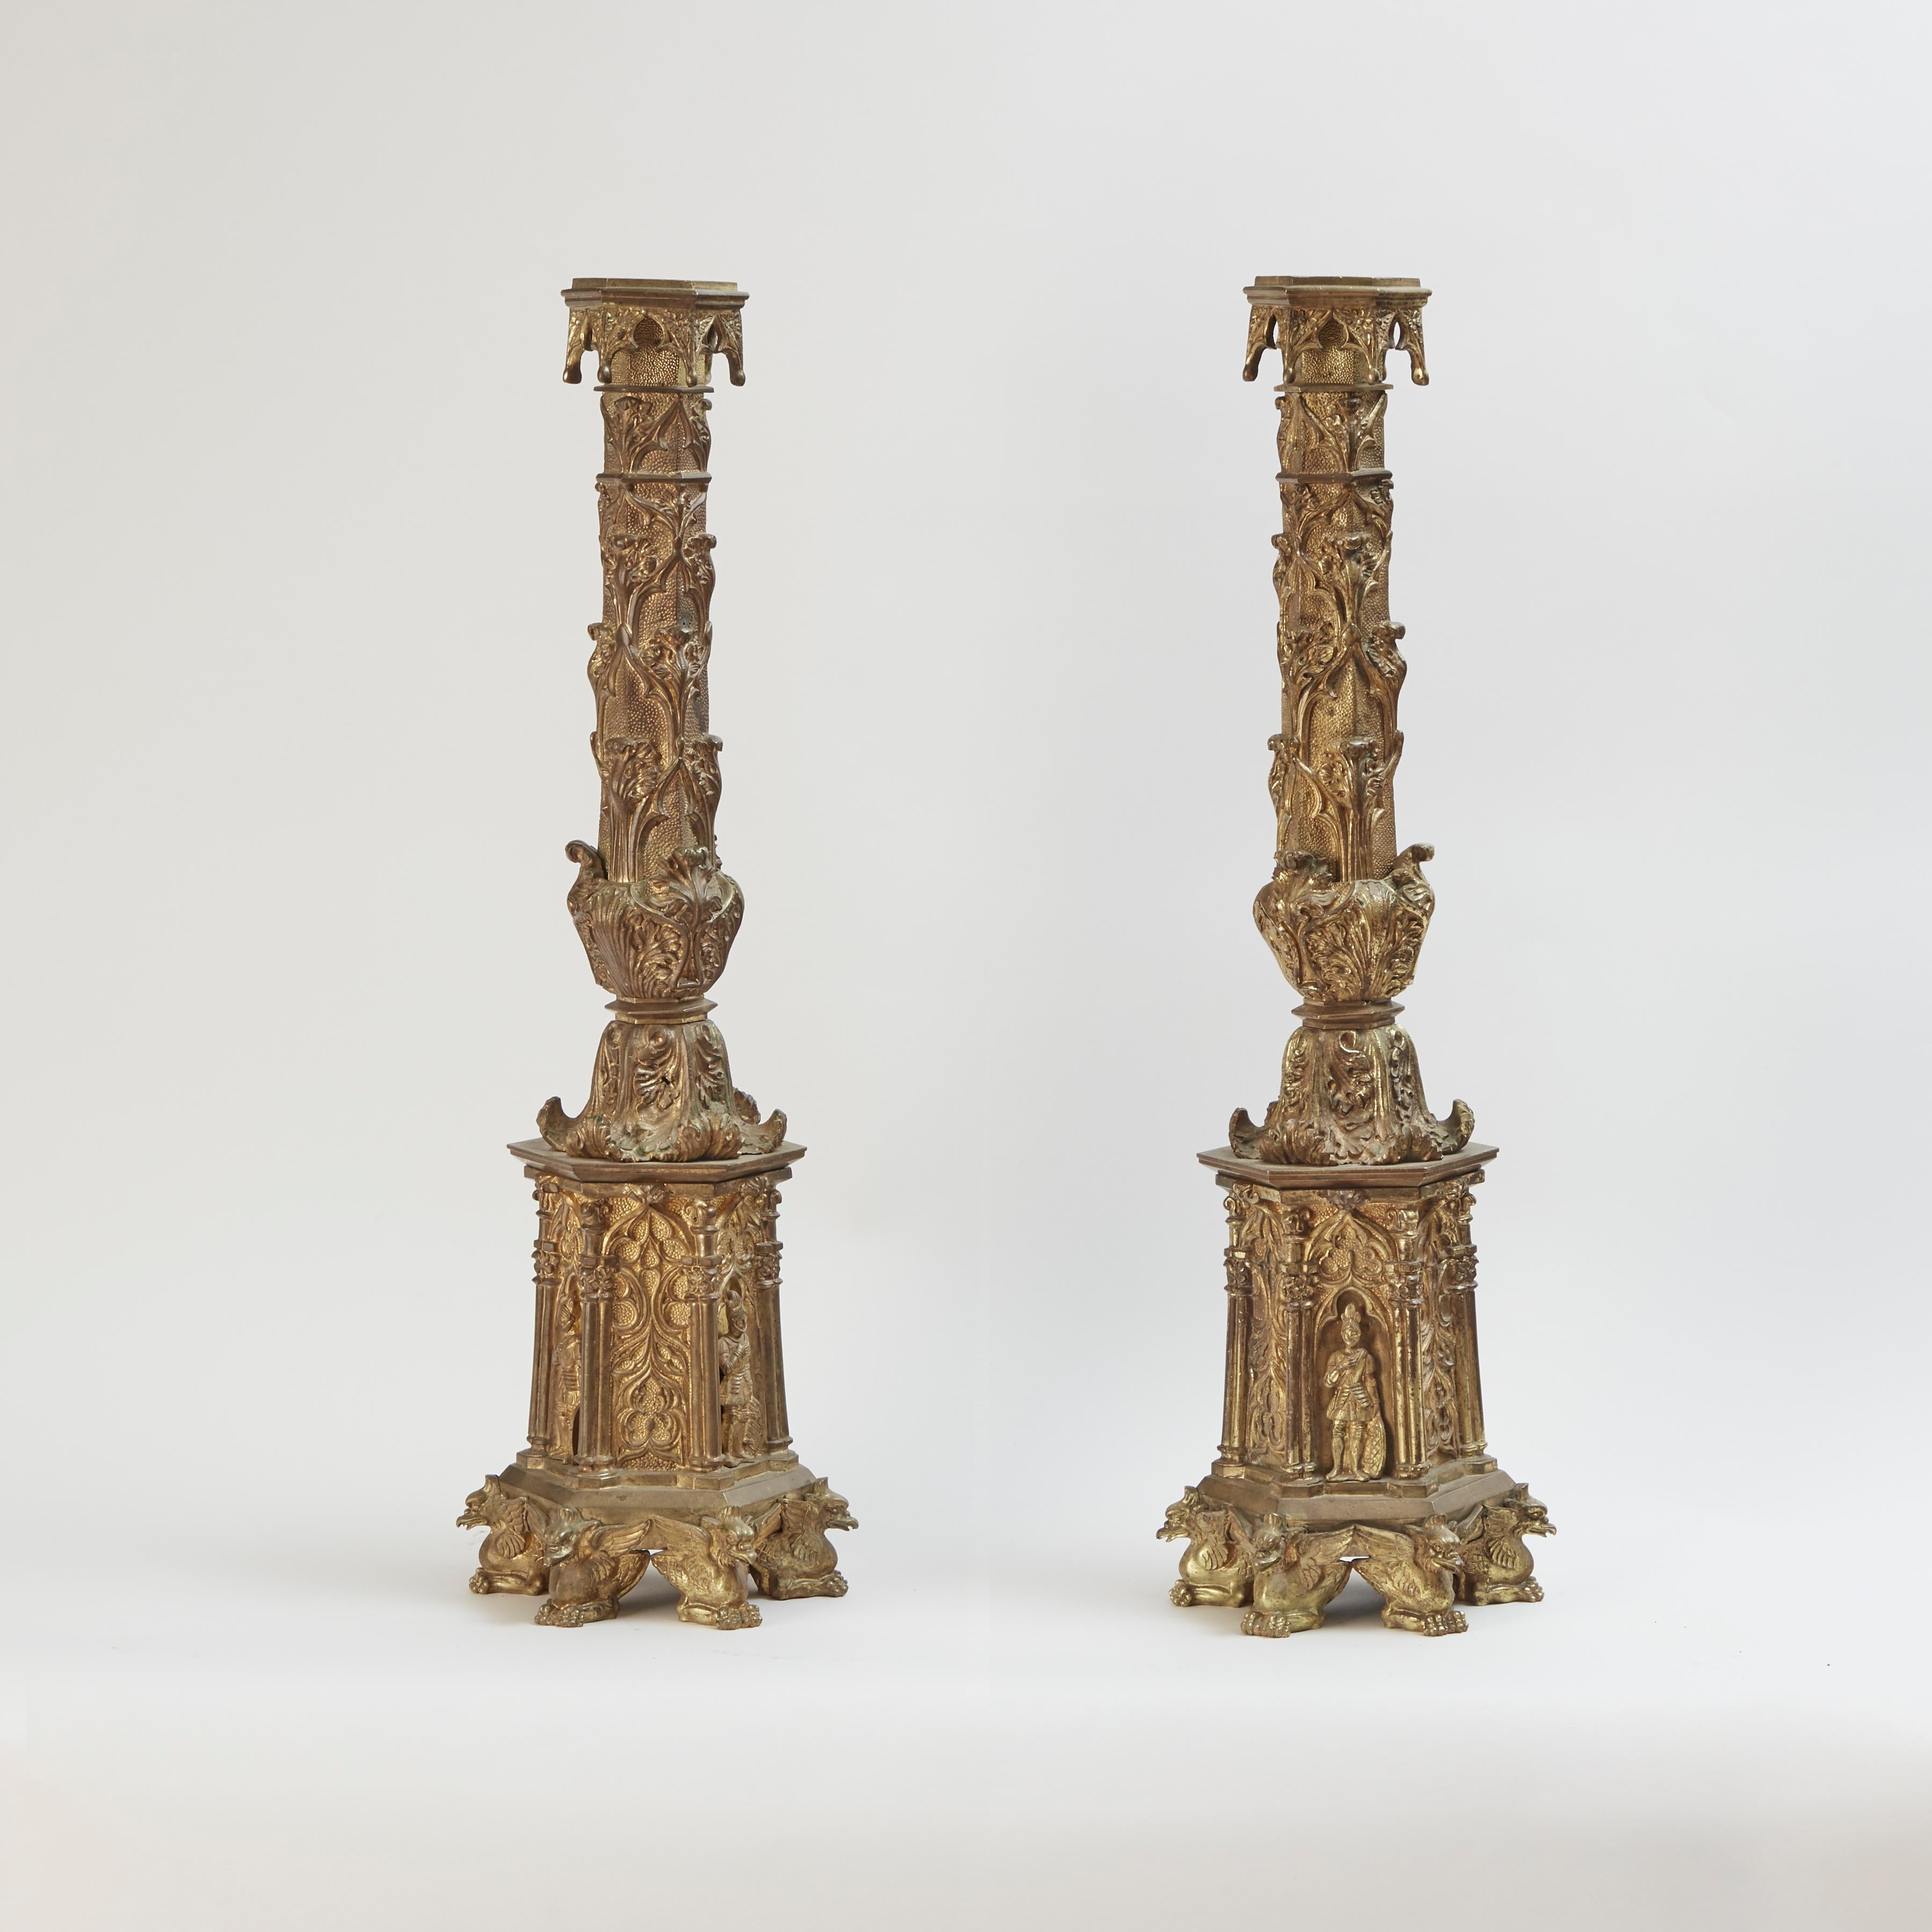 Pair of Bronze Dore Candlestick Lamps in Gothic Taste Circa 1850
Measures: 8 Diam at base
25